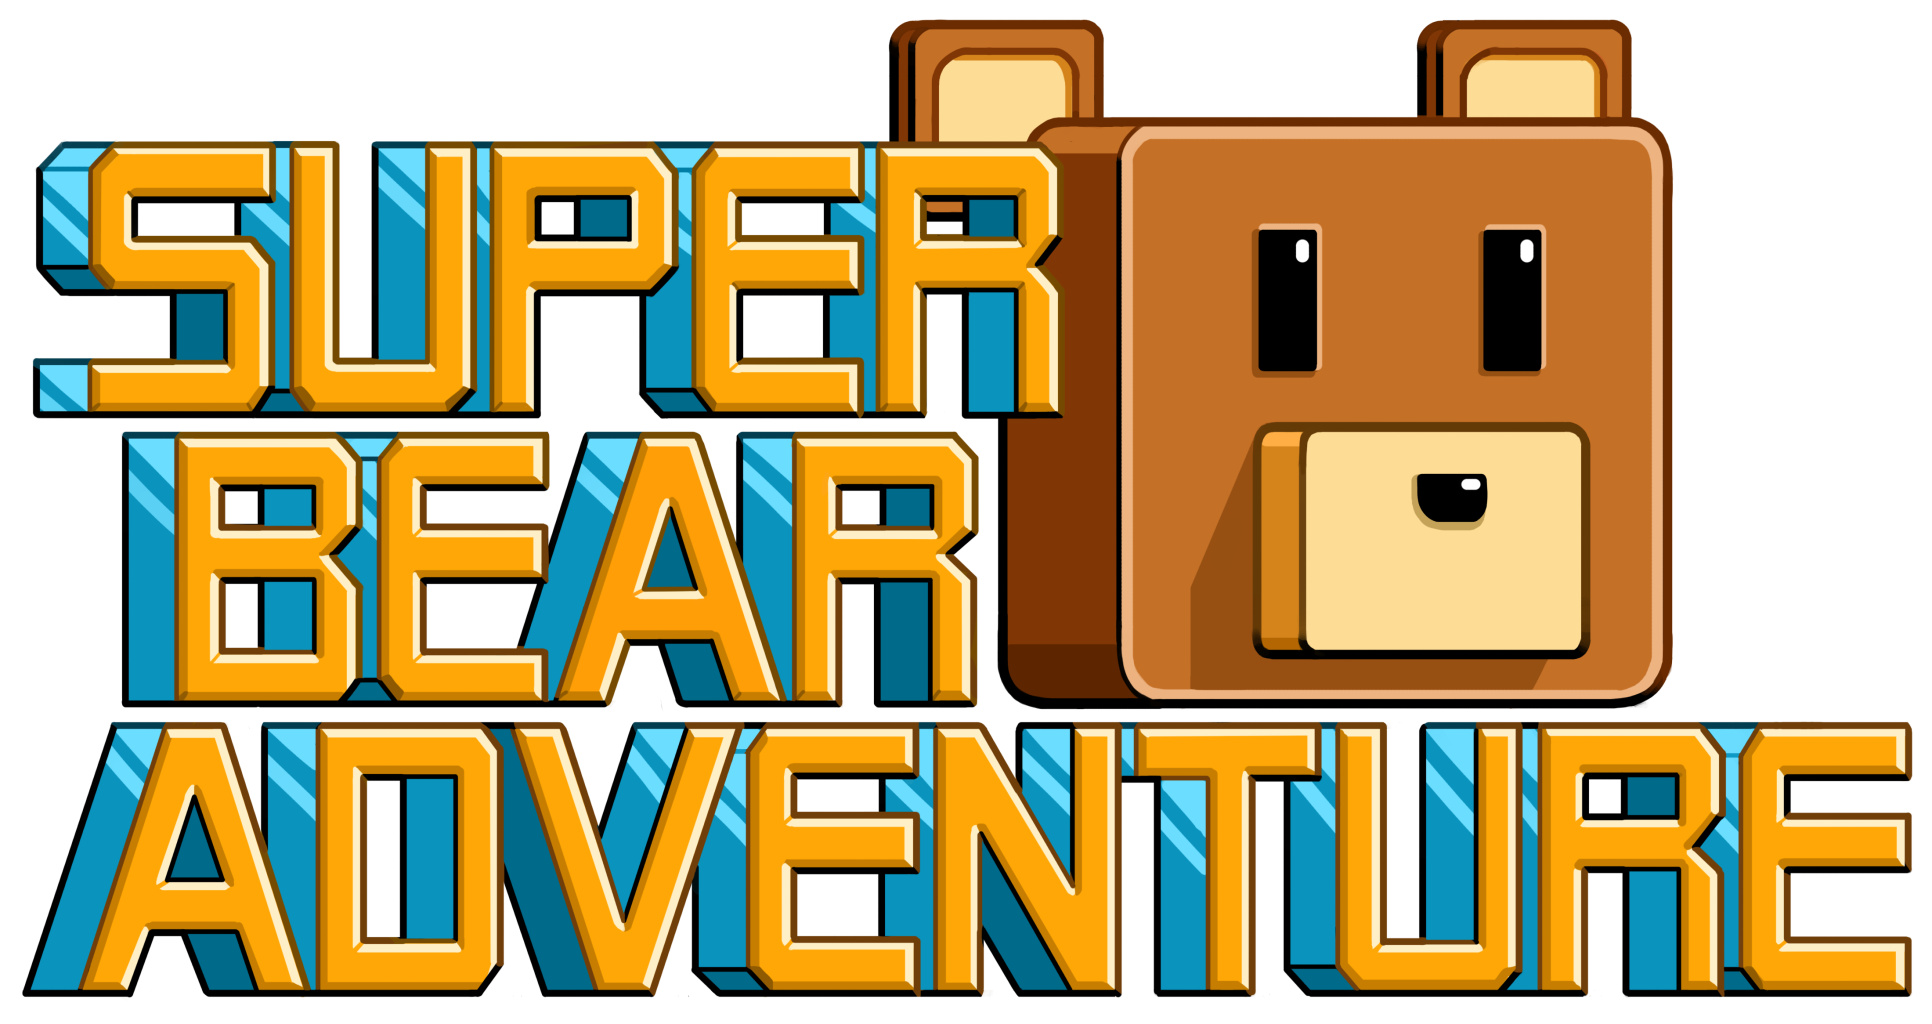 Super Bear Adventure Wiki